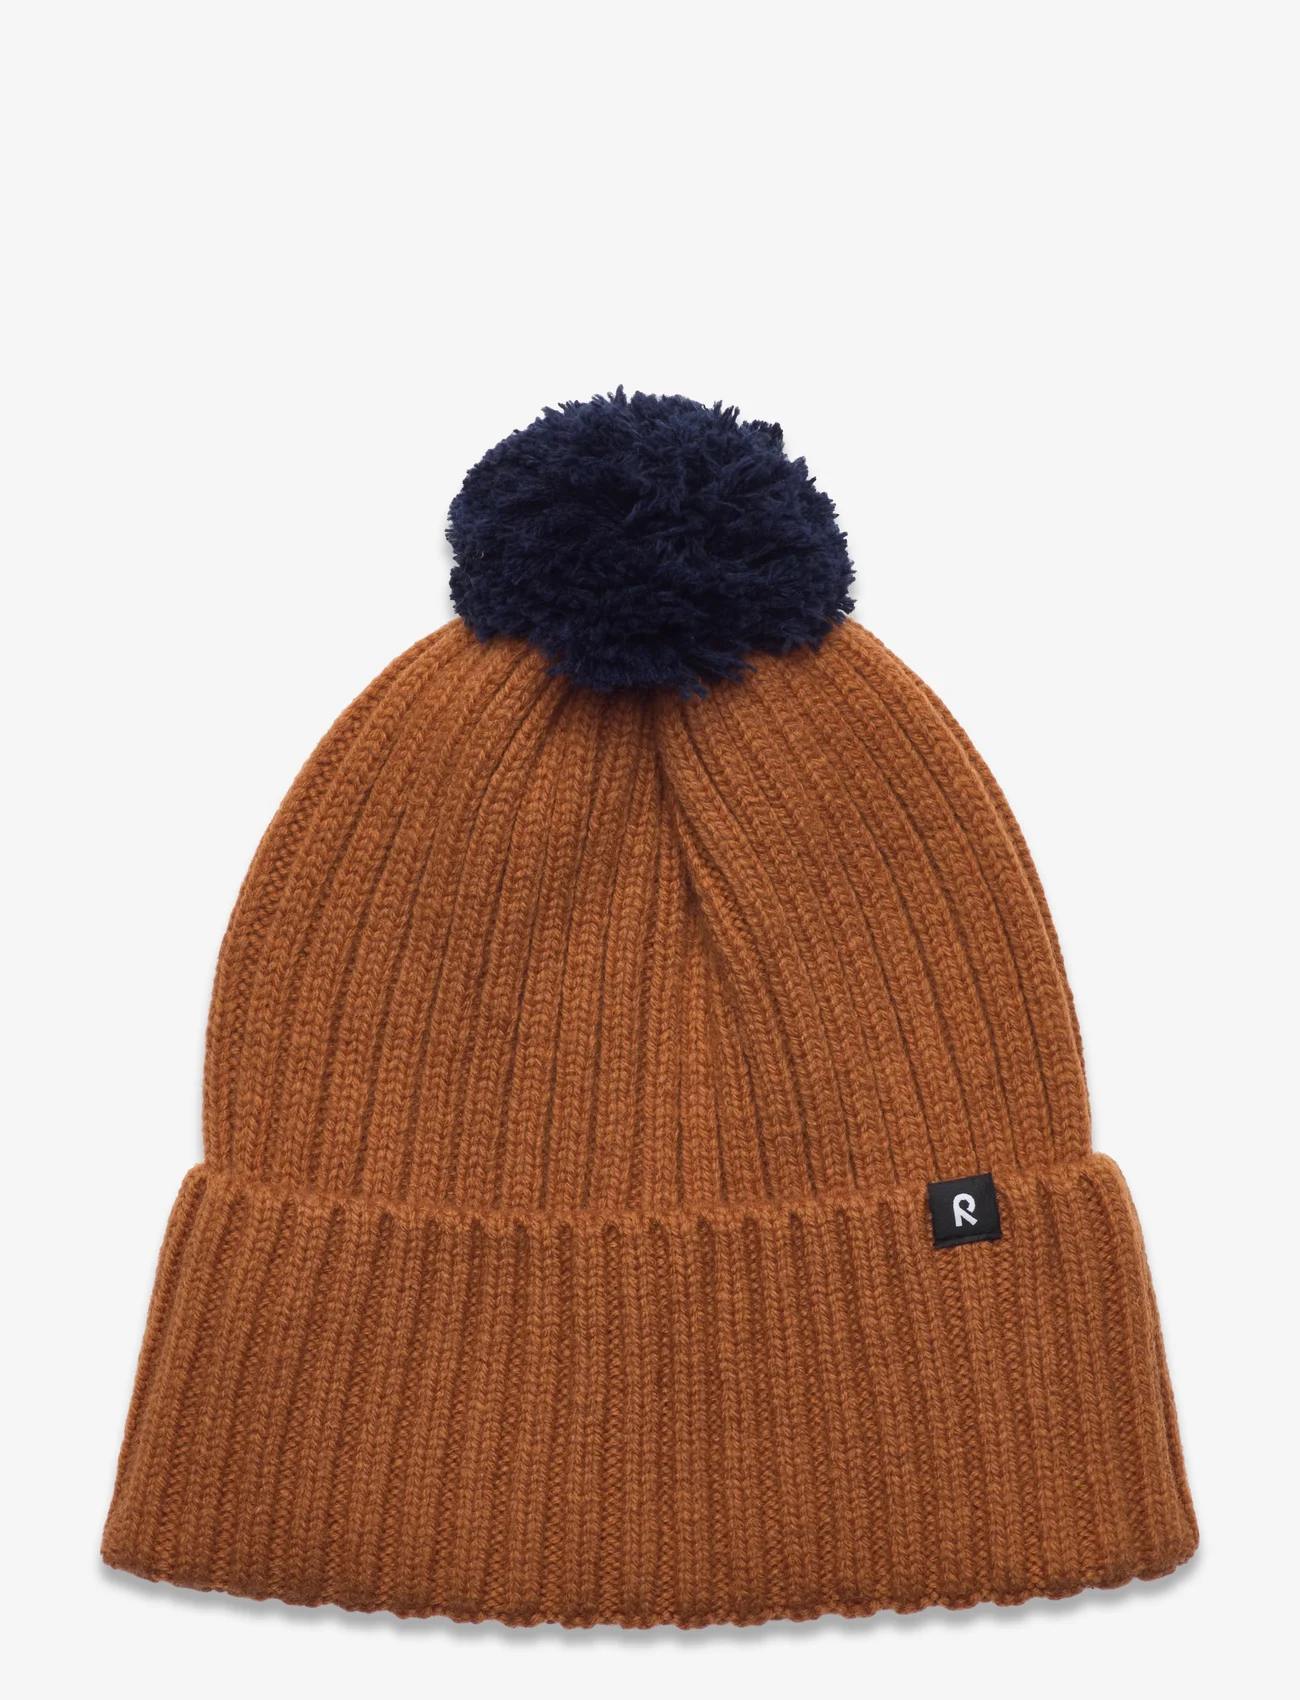 Reima - Beanie, Topsu - winter hats - cinnamon brown - 0